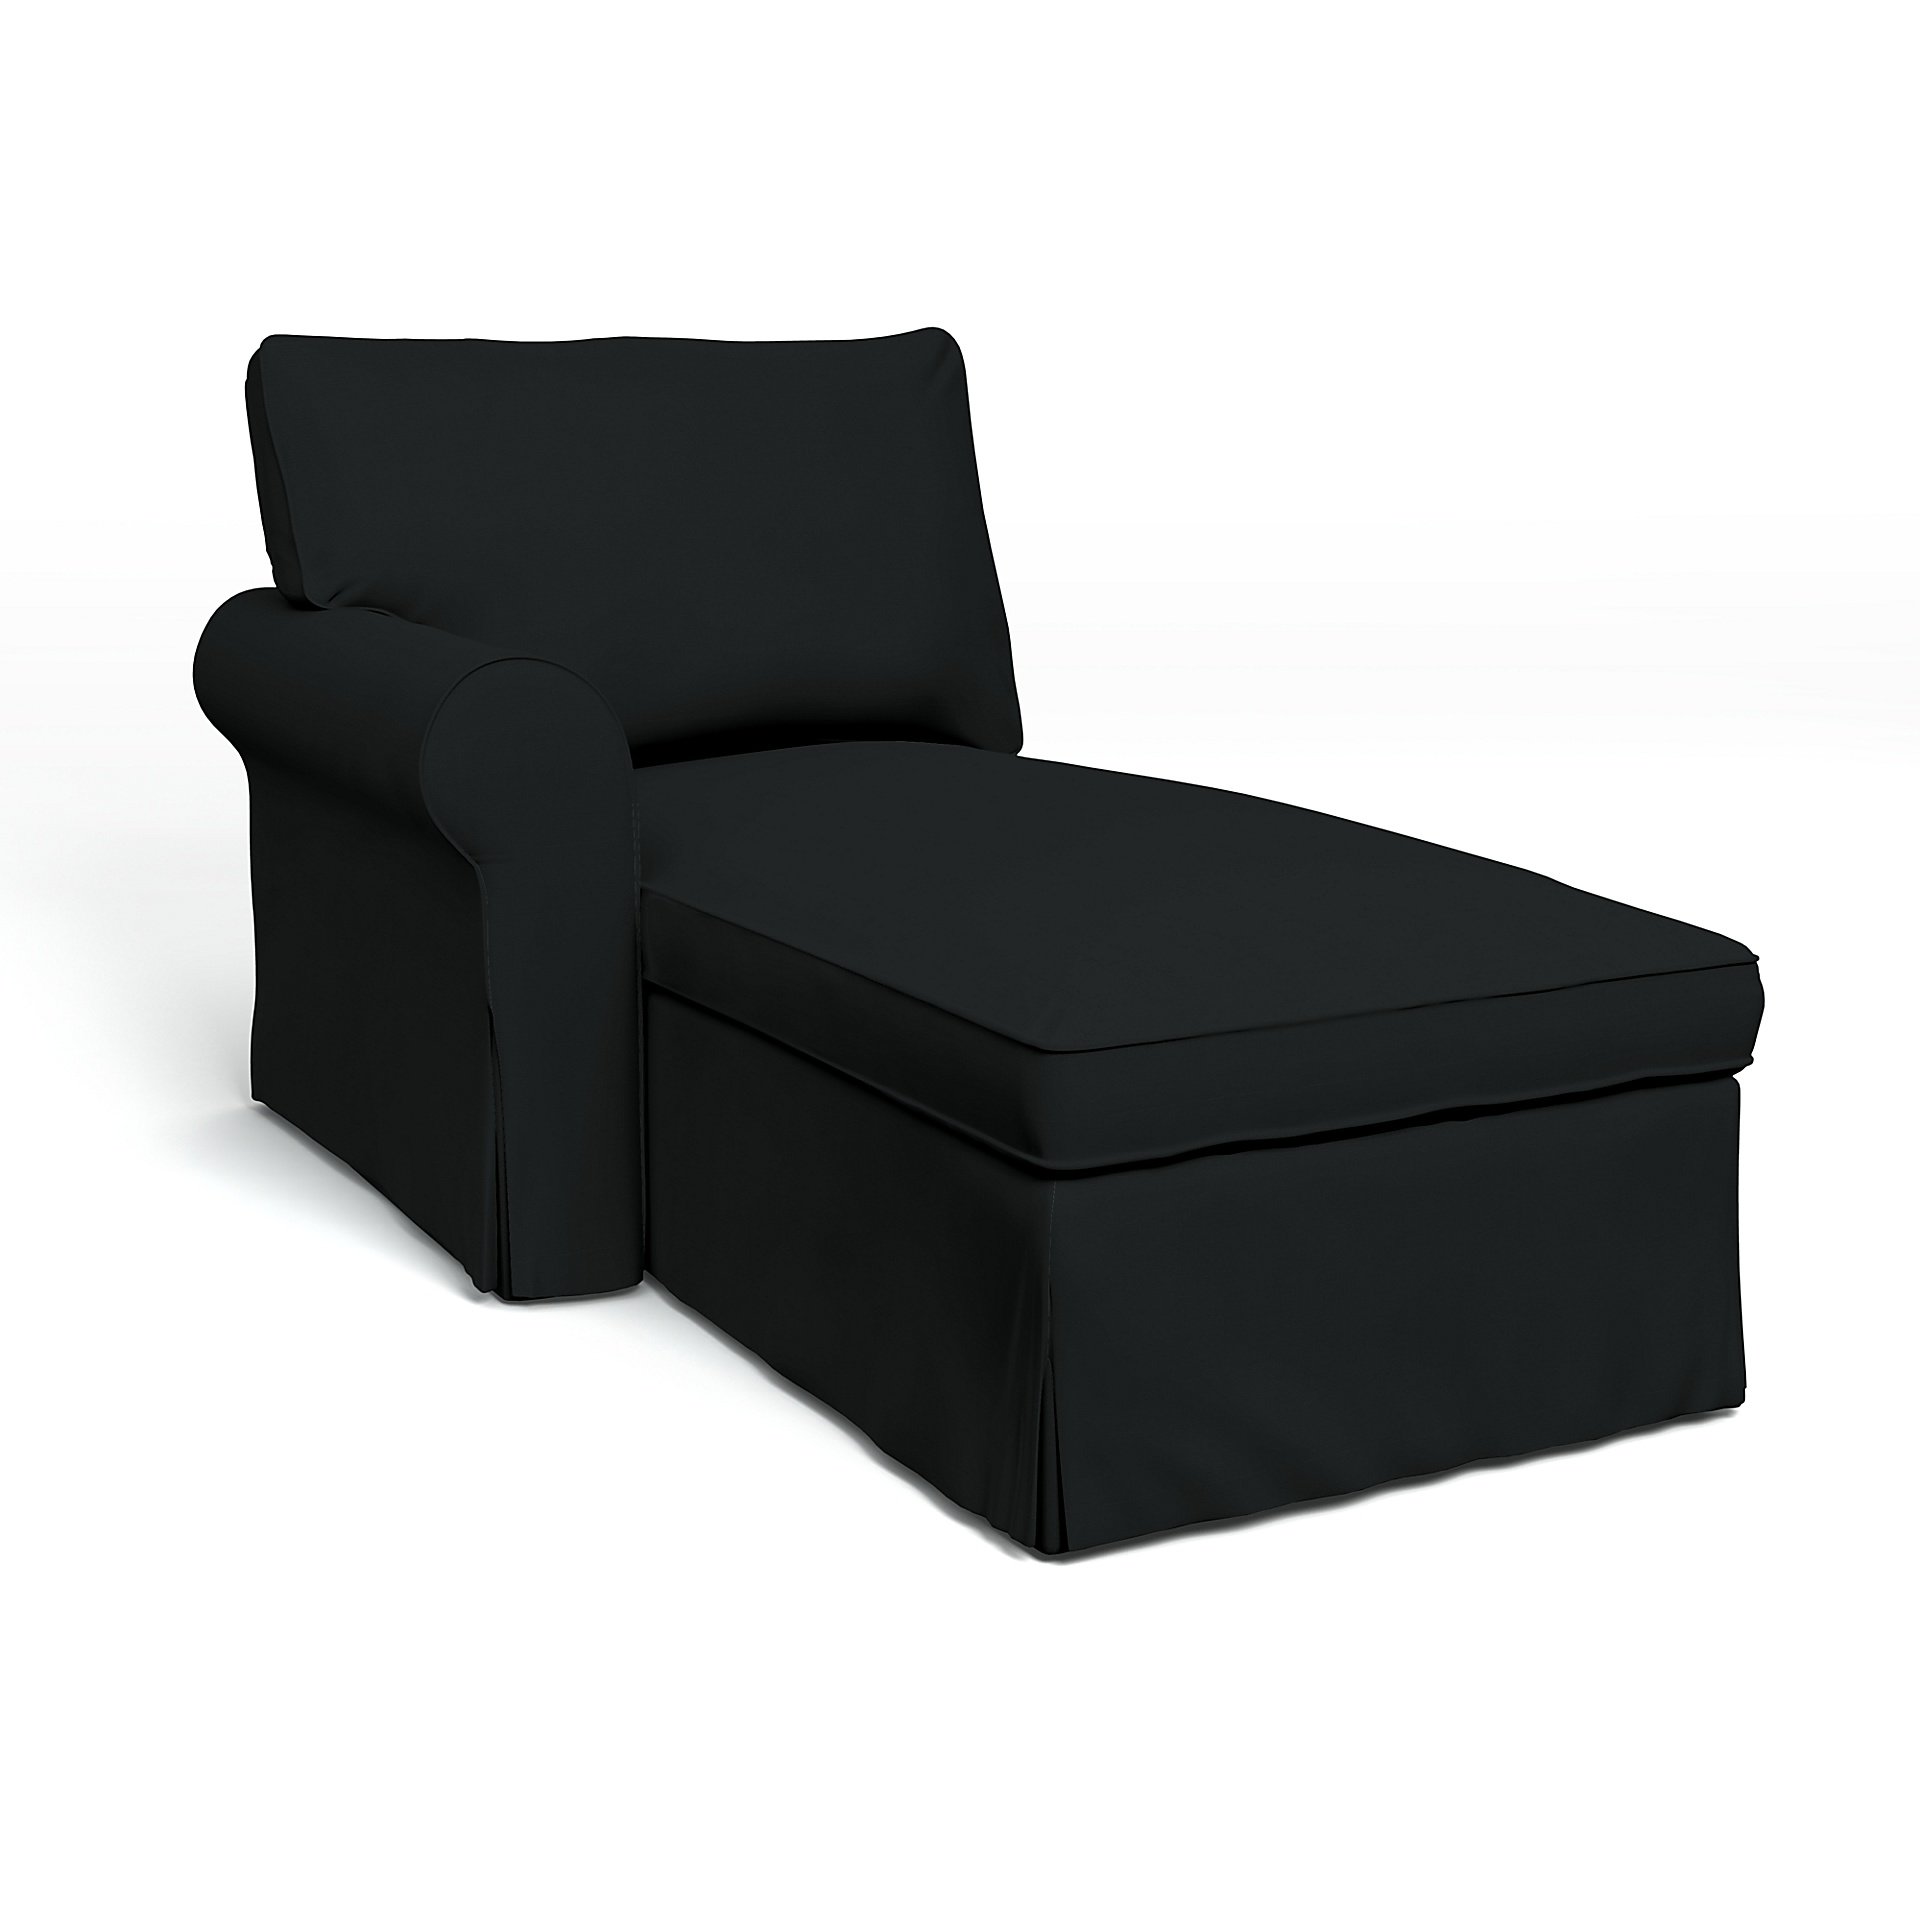 IKEA - Ektorp Chaise with Left Armrest Cover, Jet Black, Cotton - Bemz